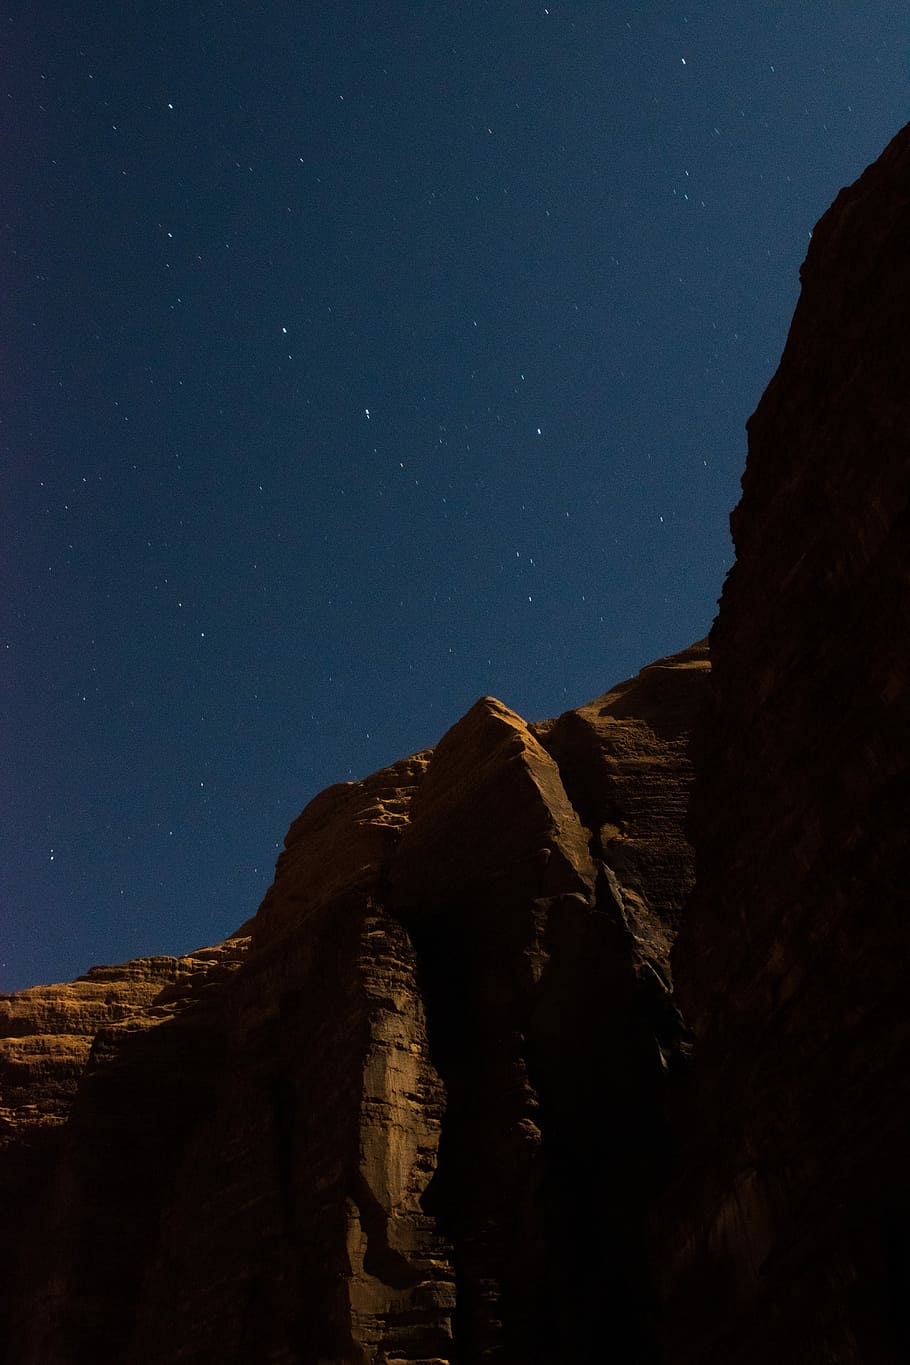 brown canyon during night time, brown rock mountain under dark sky